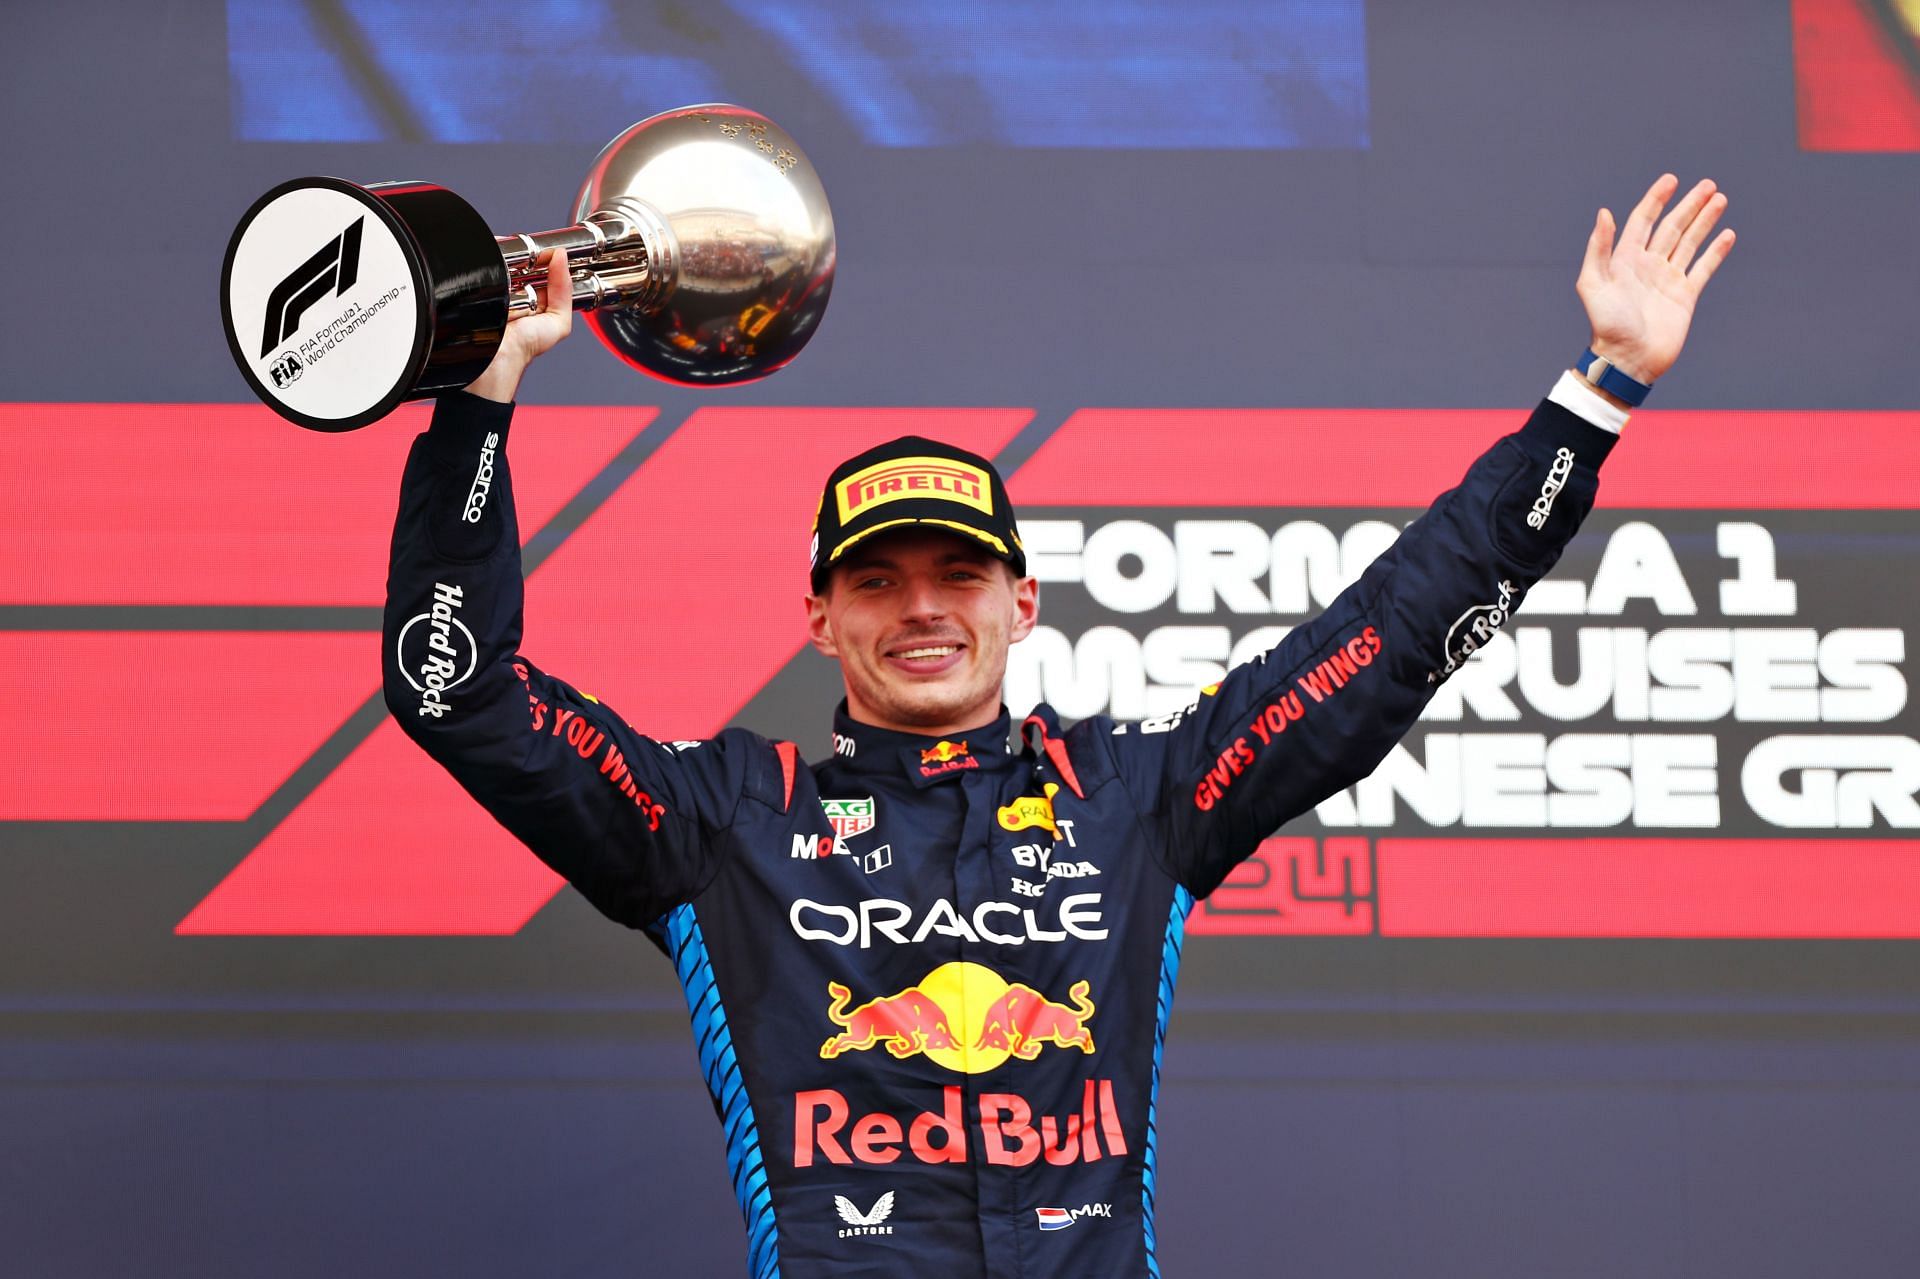 Max Verstappen has been the man to beat in Formula 1